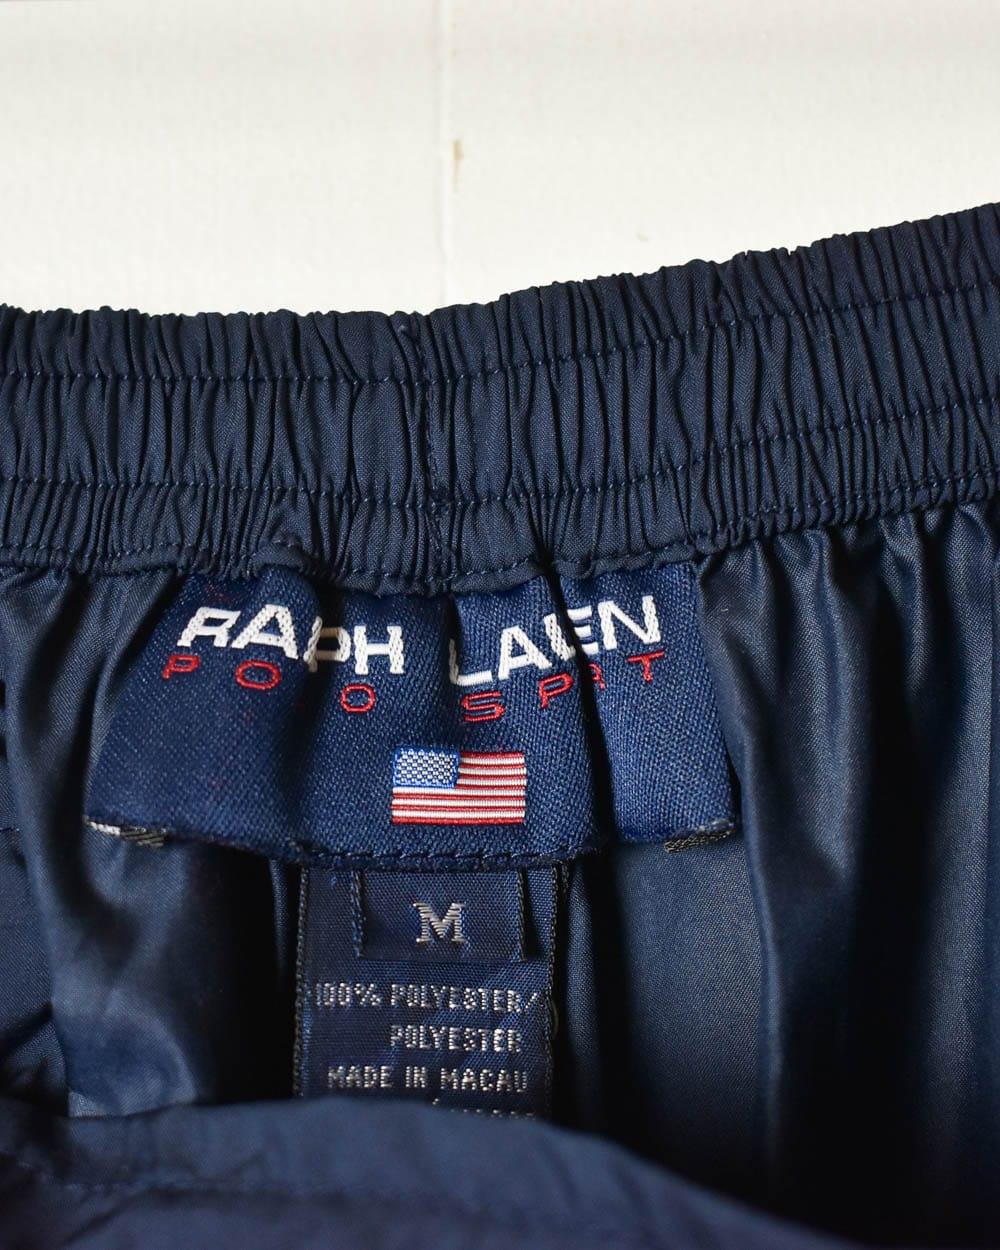 Navy Polo Sport Ralph Lauren Tracksuit Bottoms - Medium